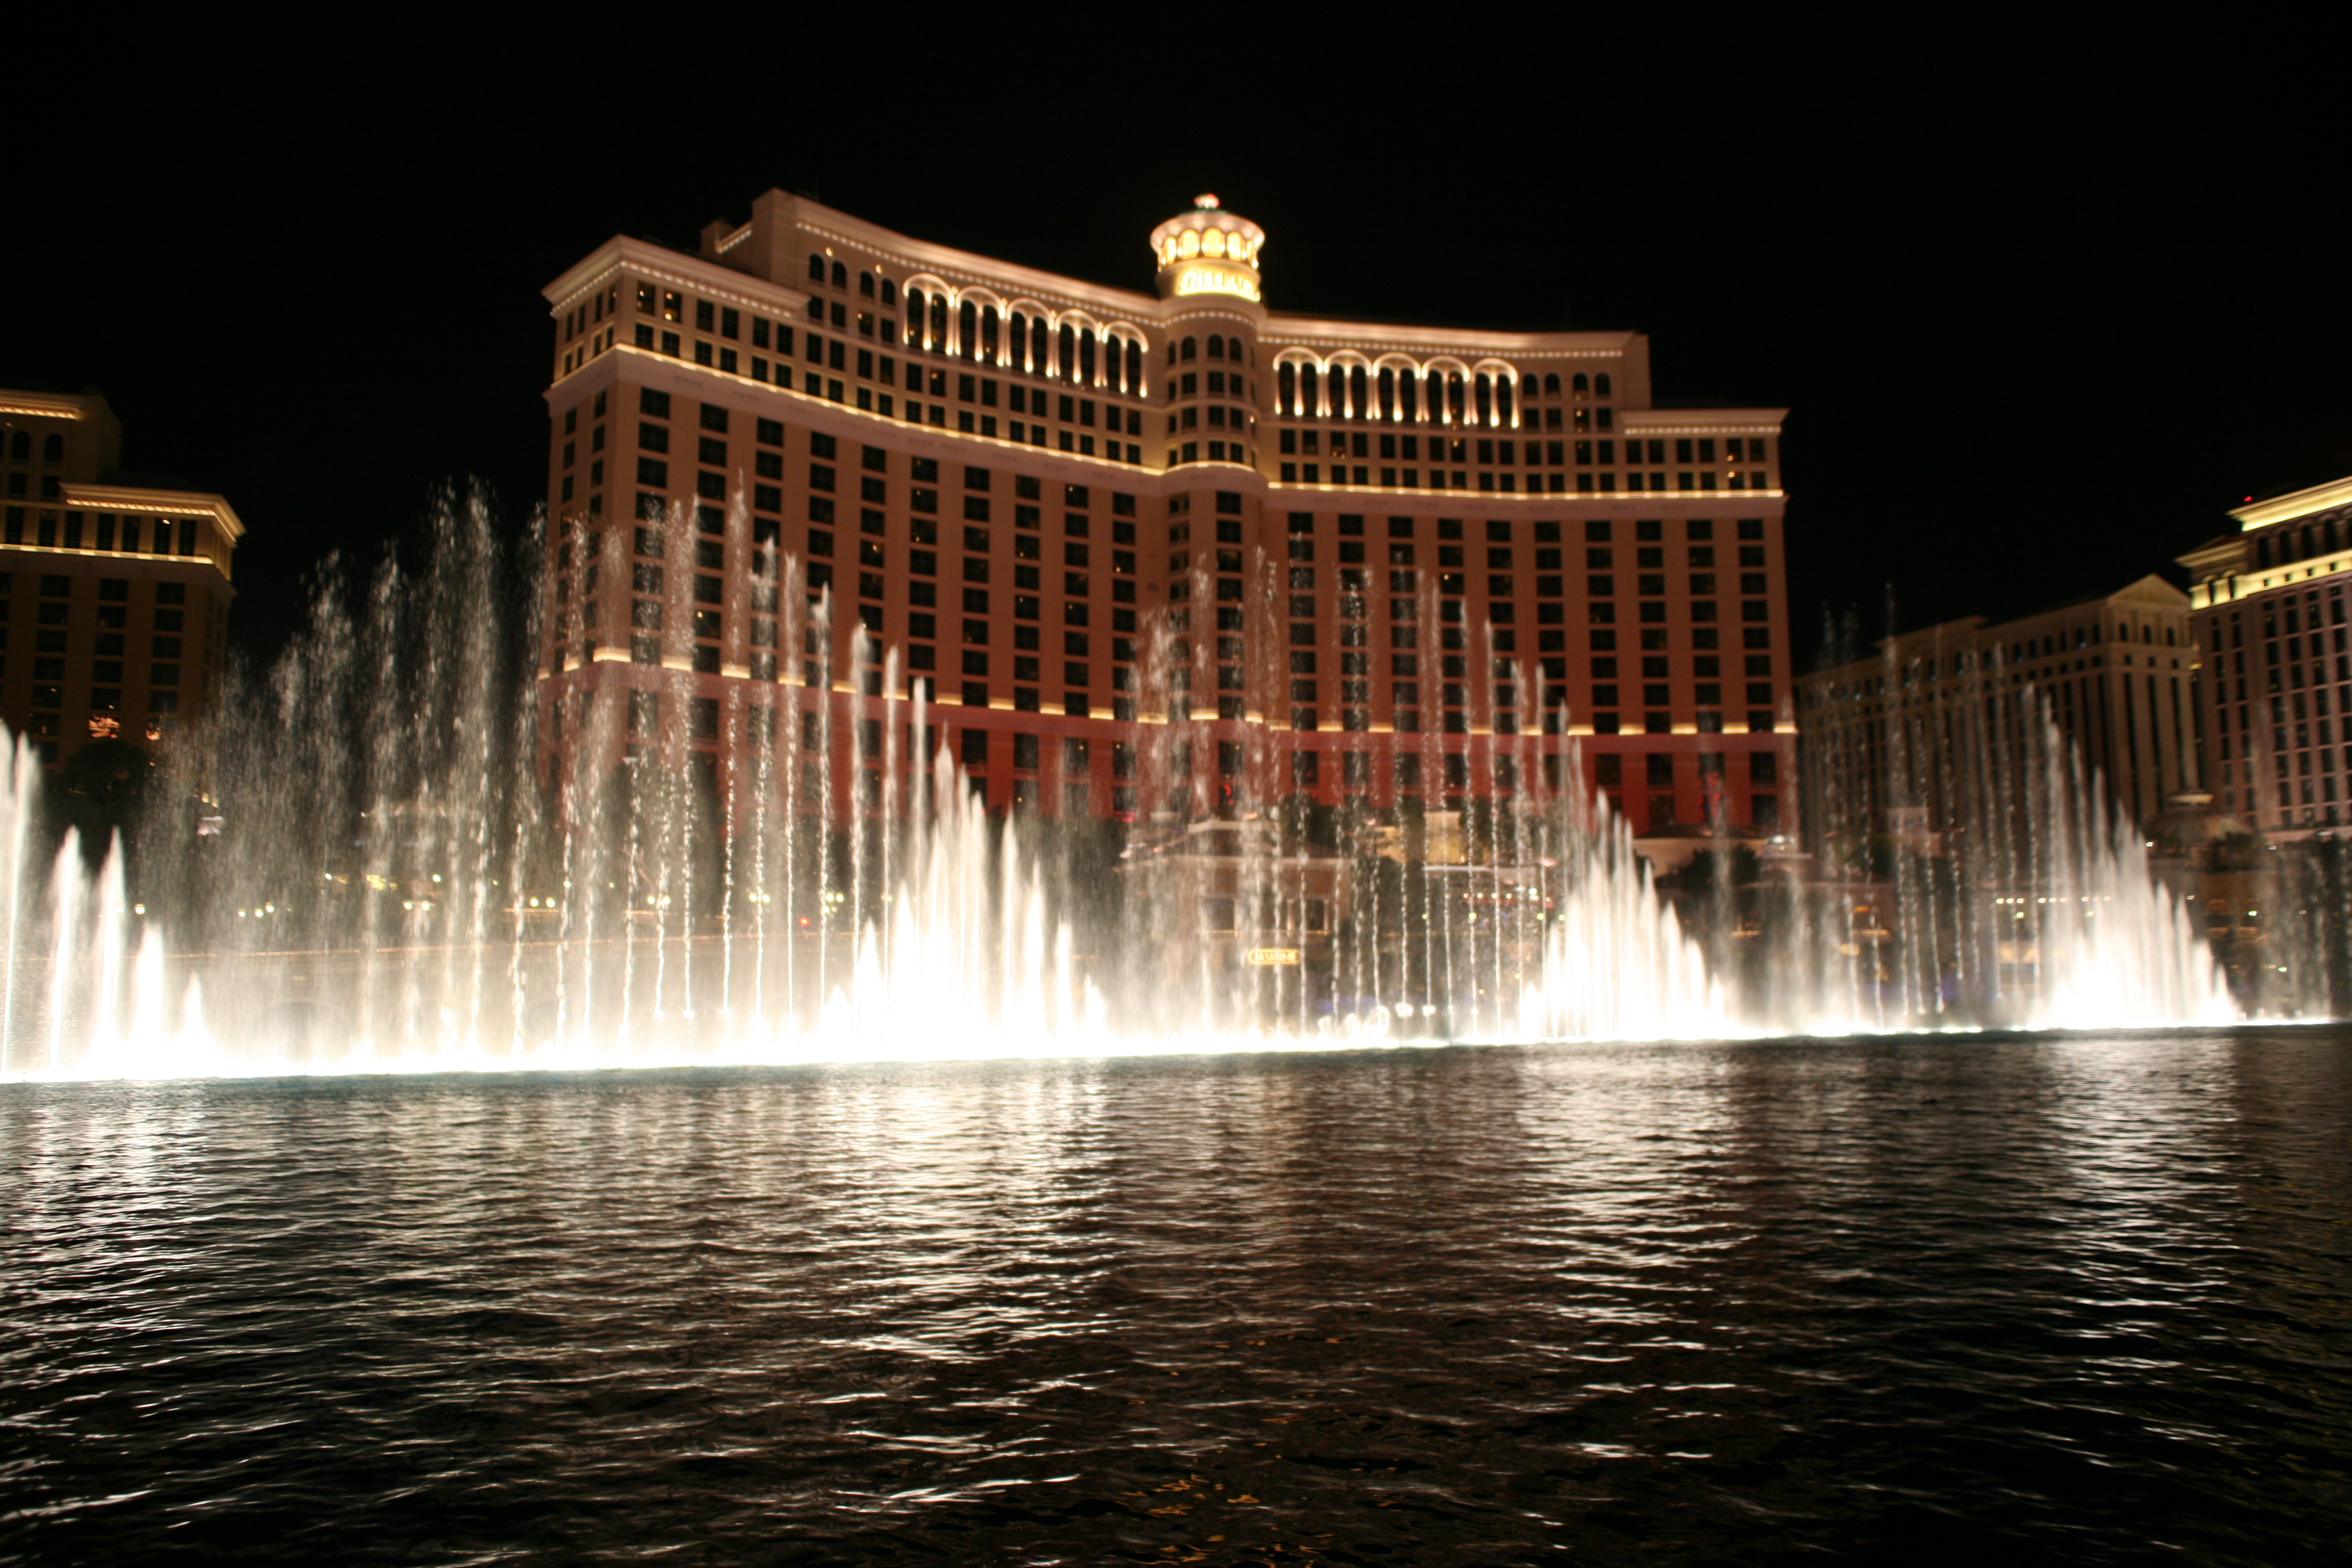 Entertainment Company to add $100 million tower to Paris Las Vegas